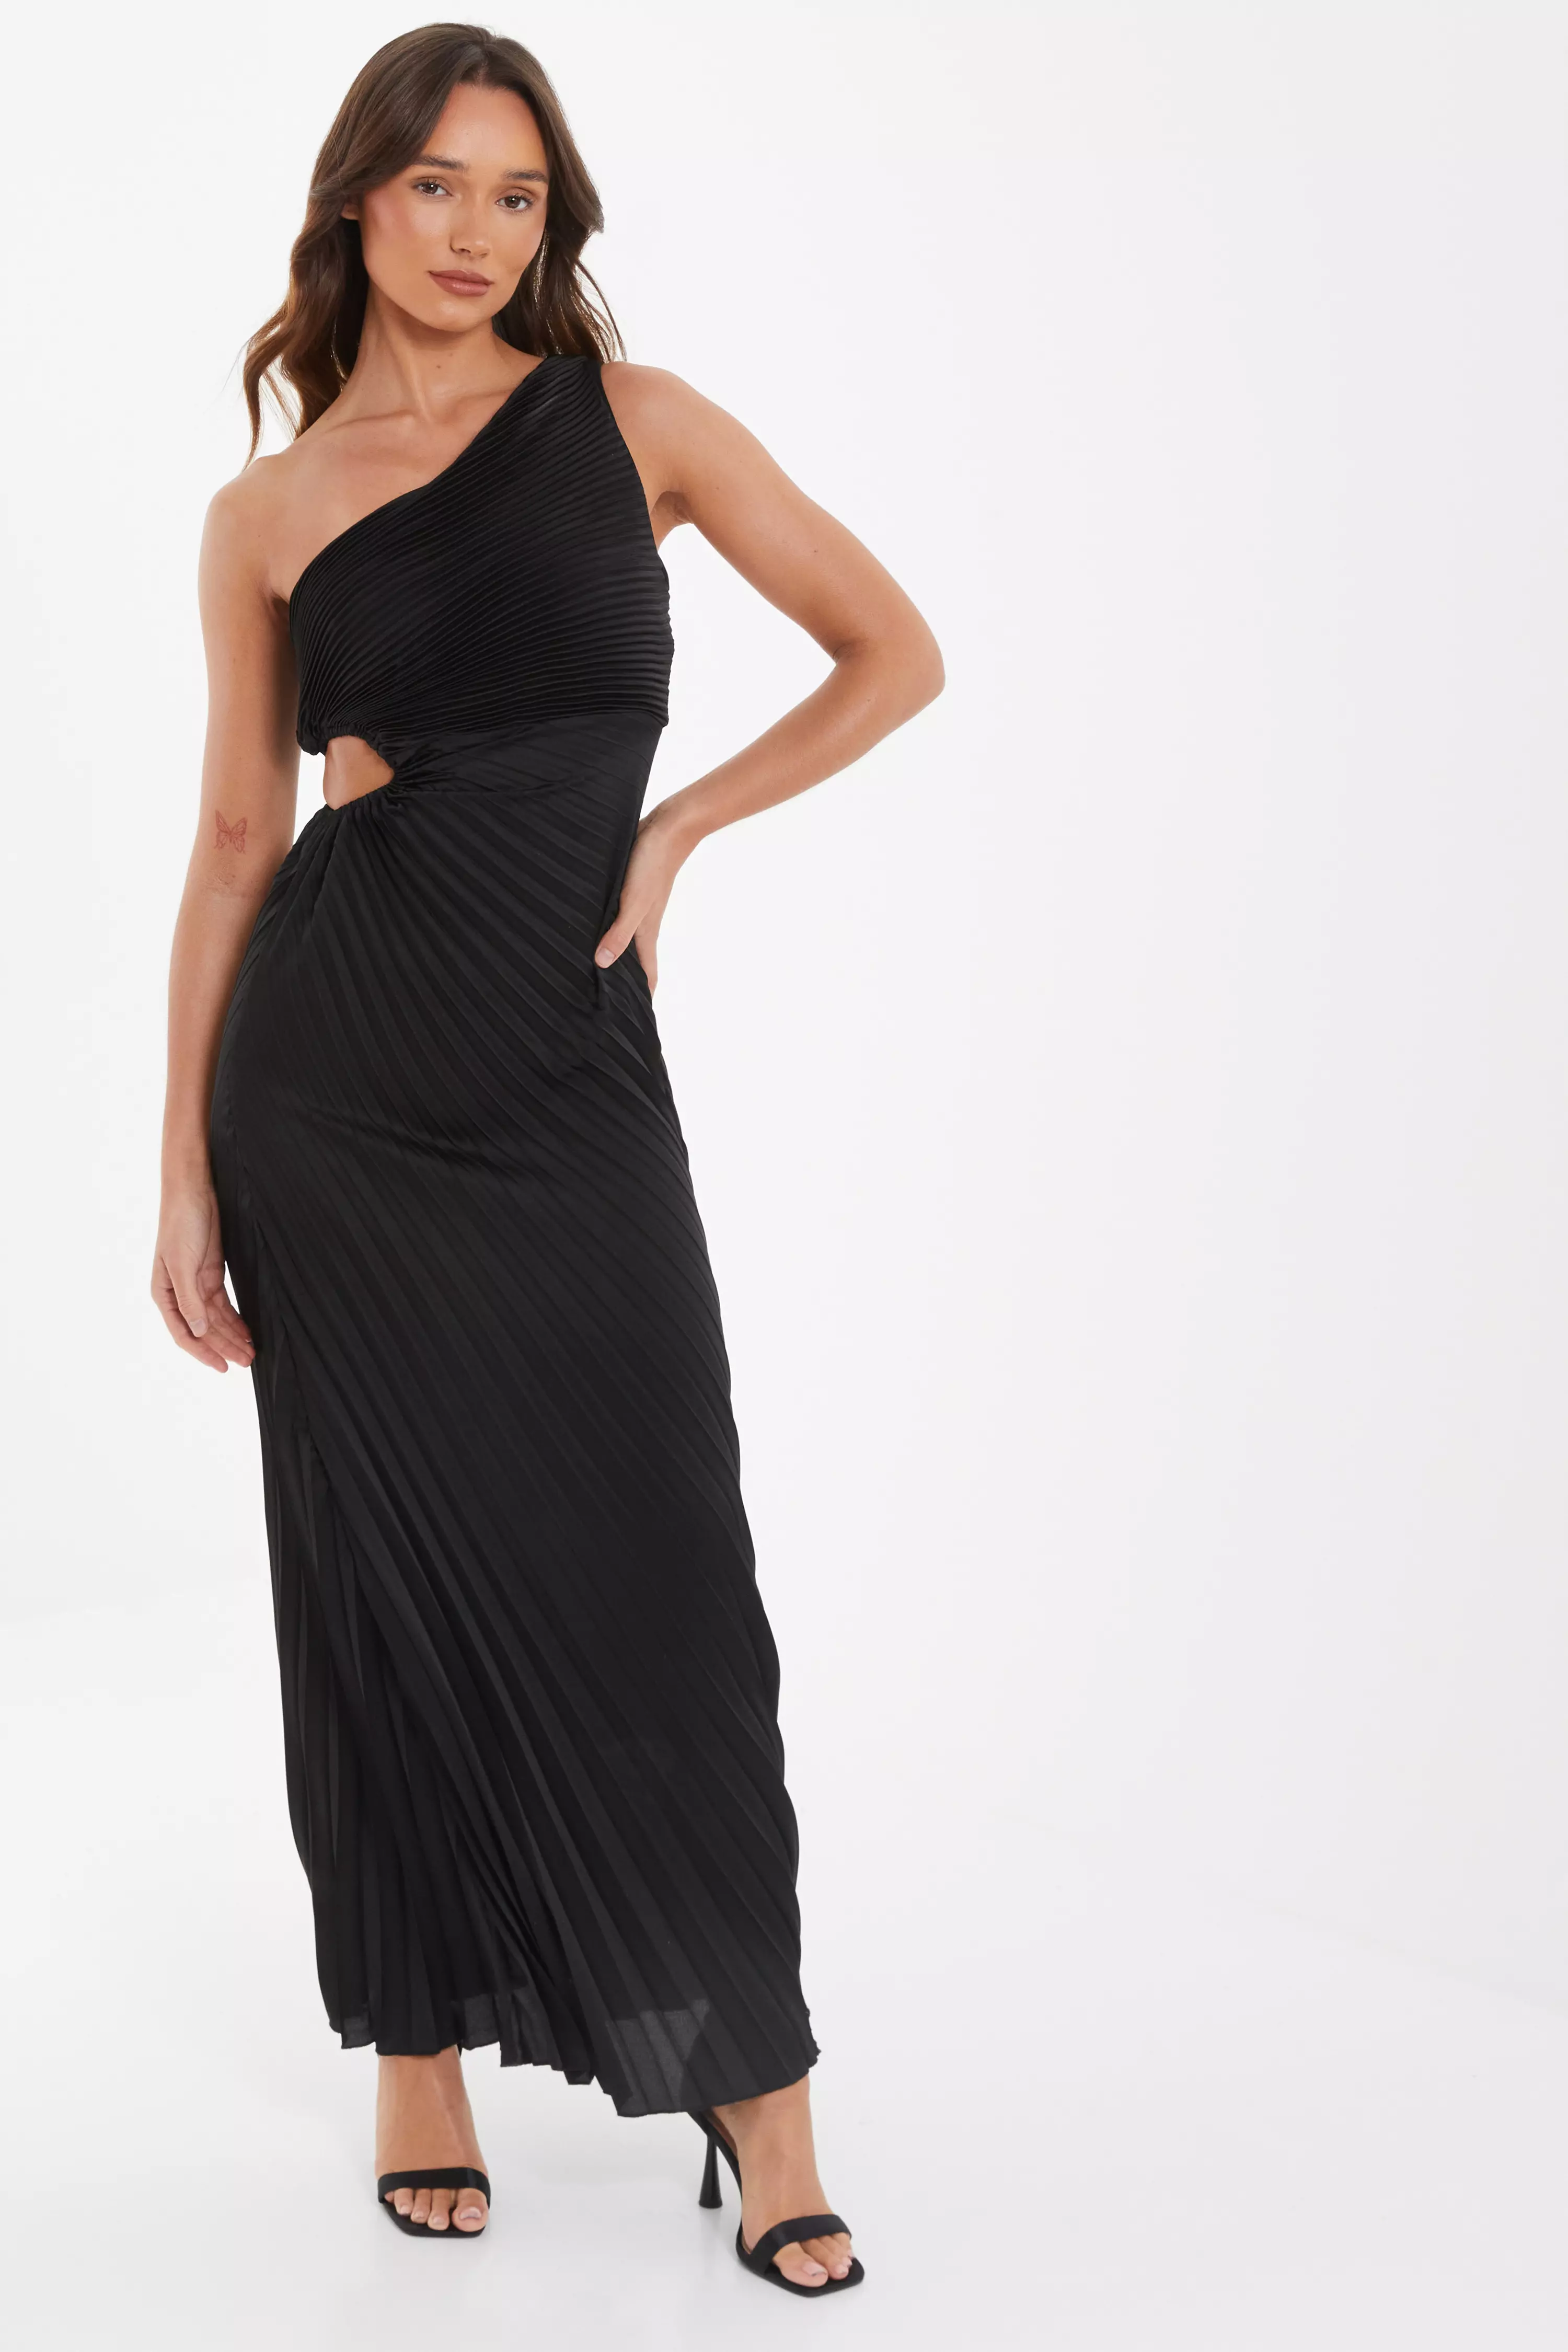 Black One Shoulder Pleated Maxi Dress - QUIZ Clothing